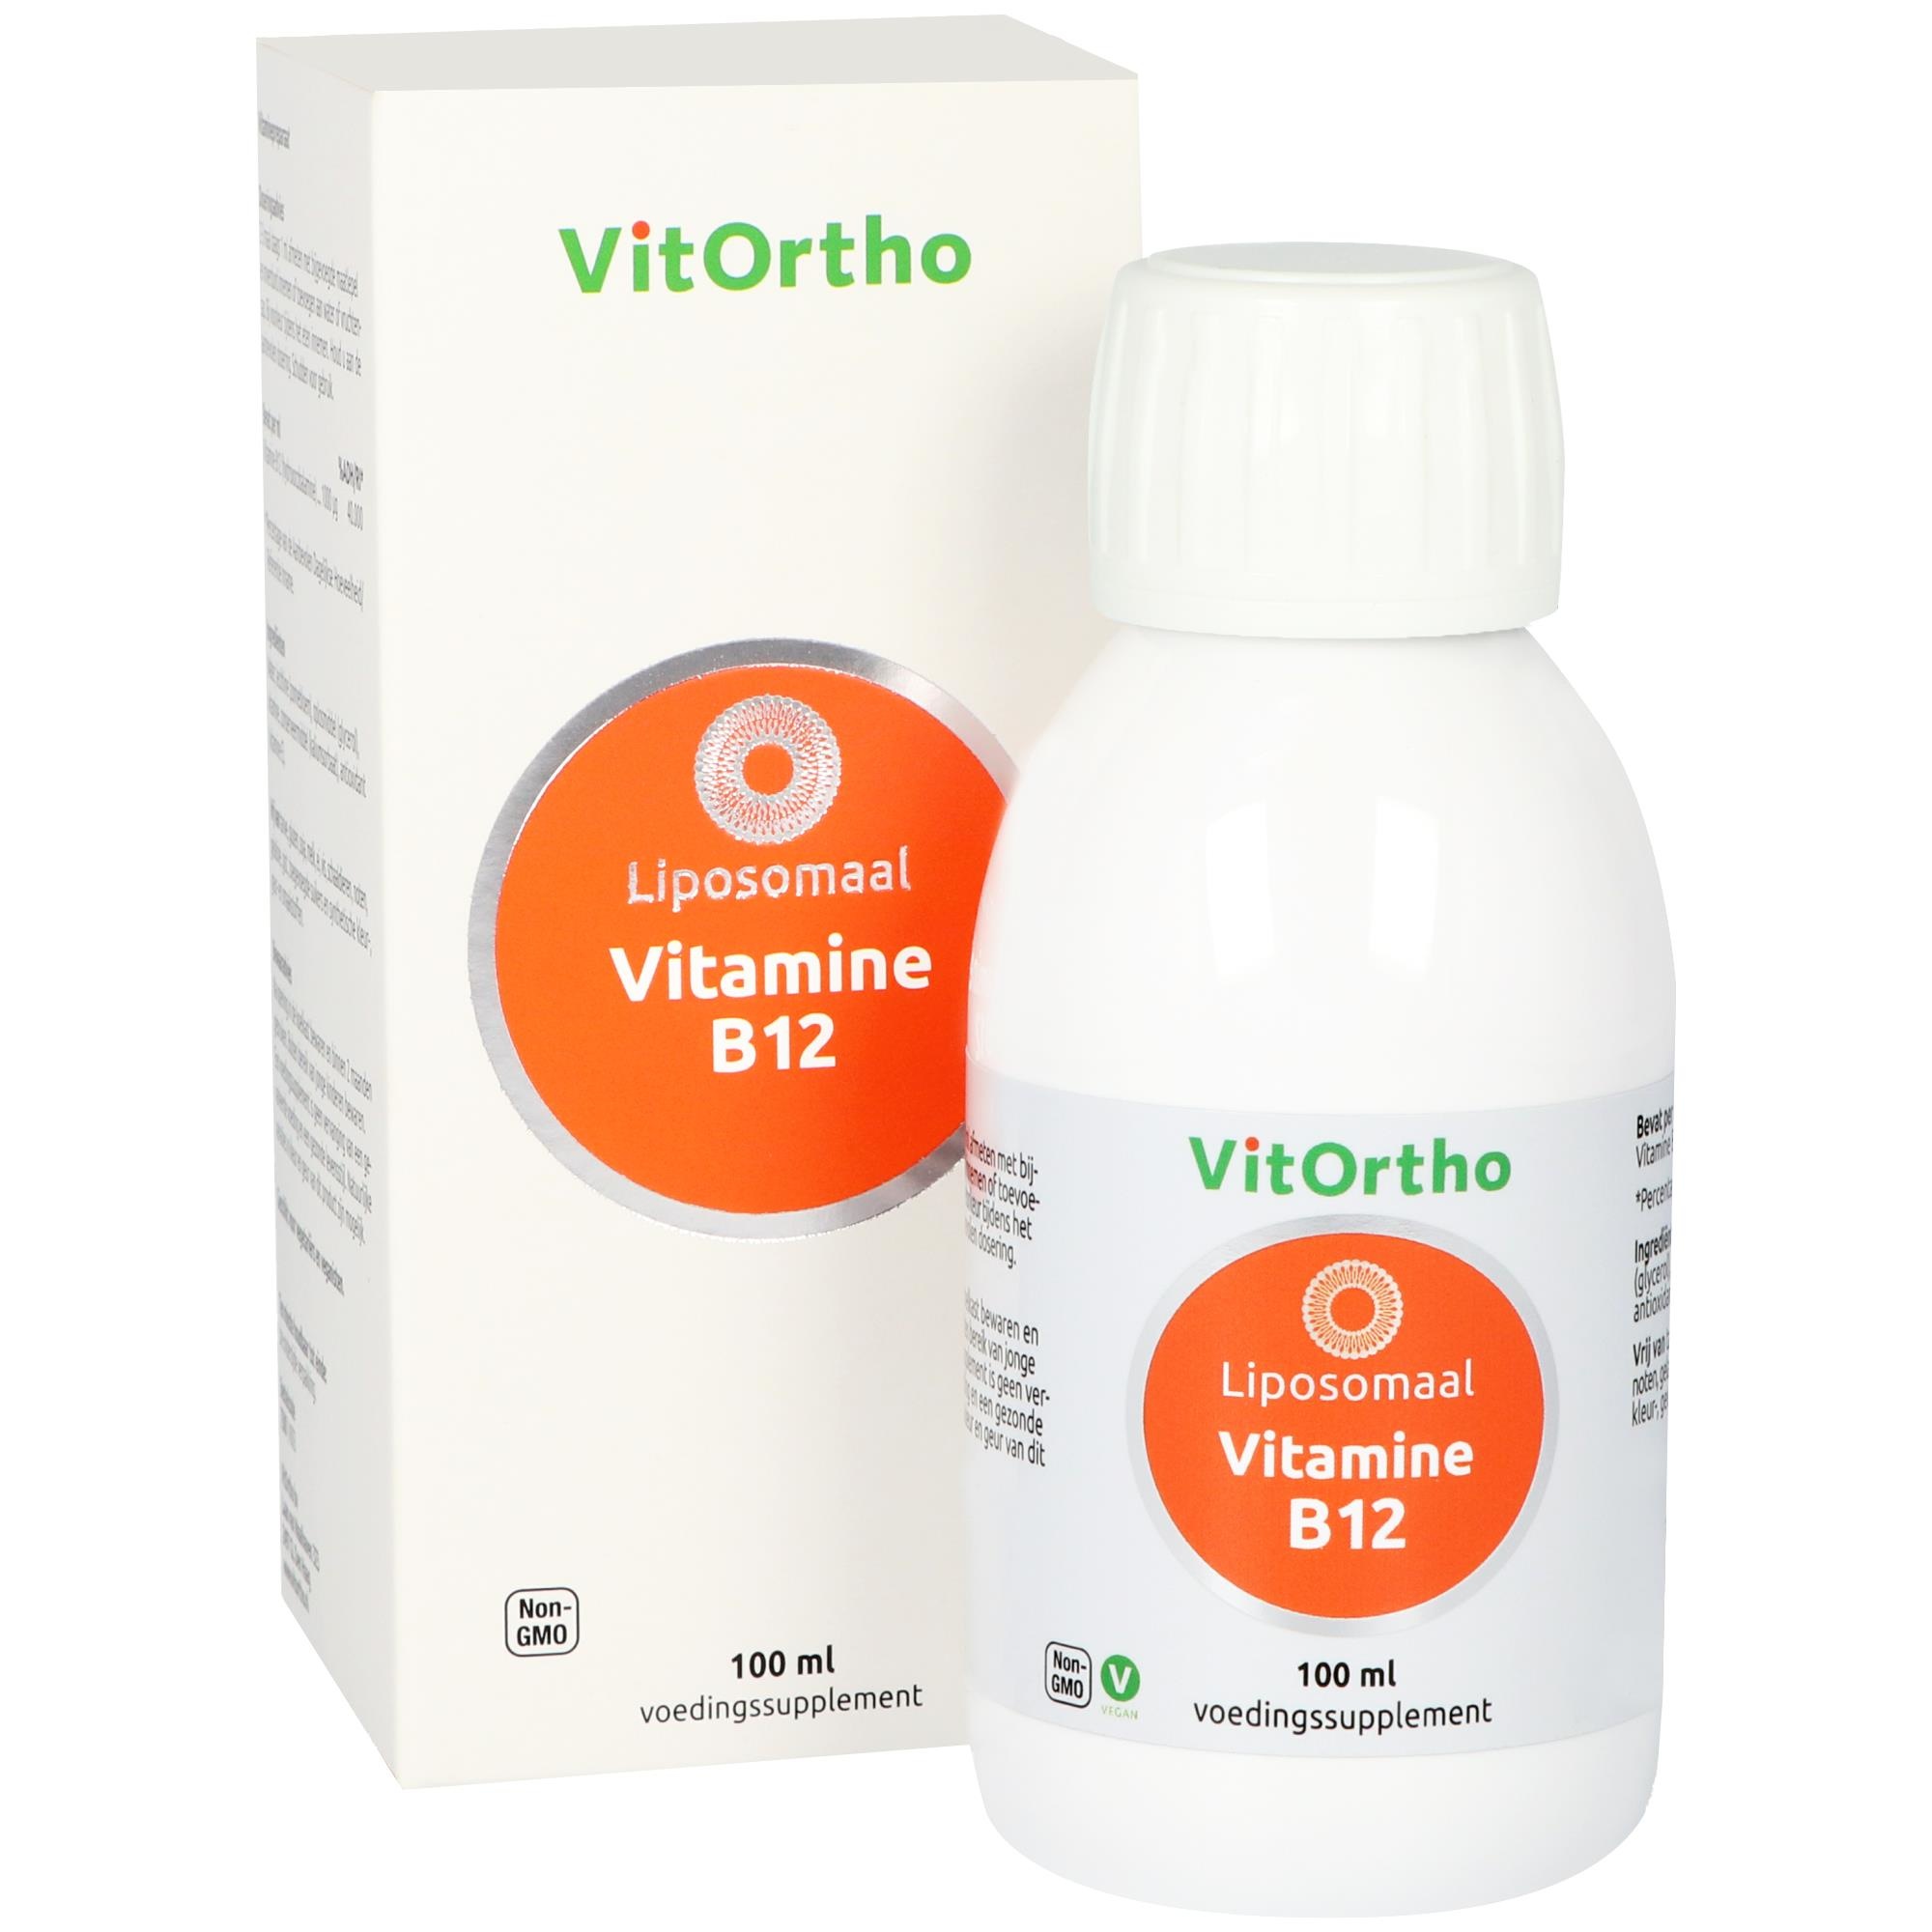 VitOrtho VitOrtho Vitamine B12 liposomaal (100 ml)